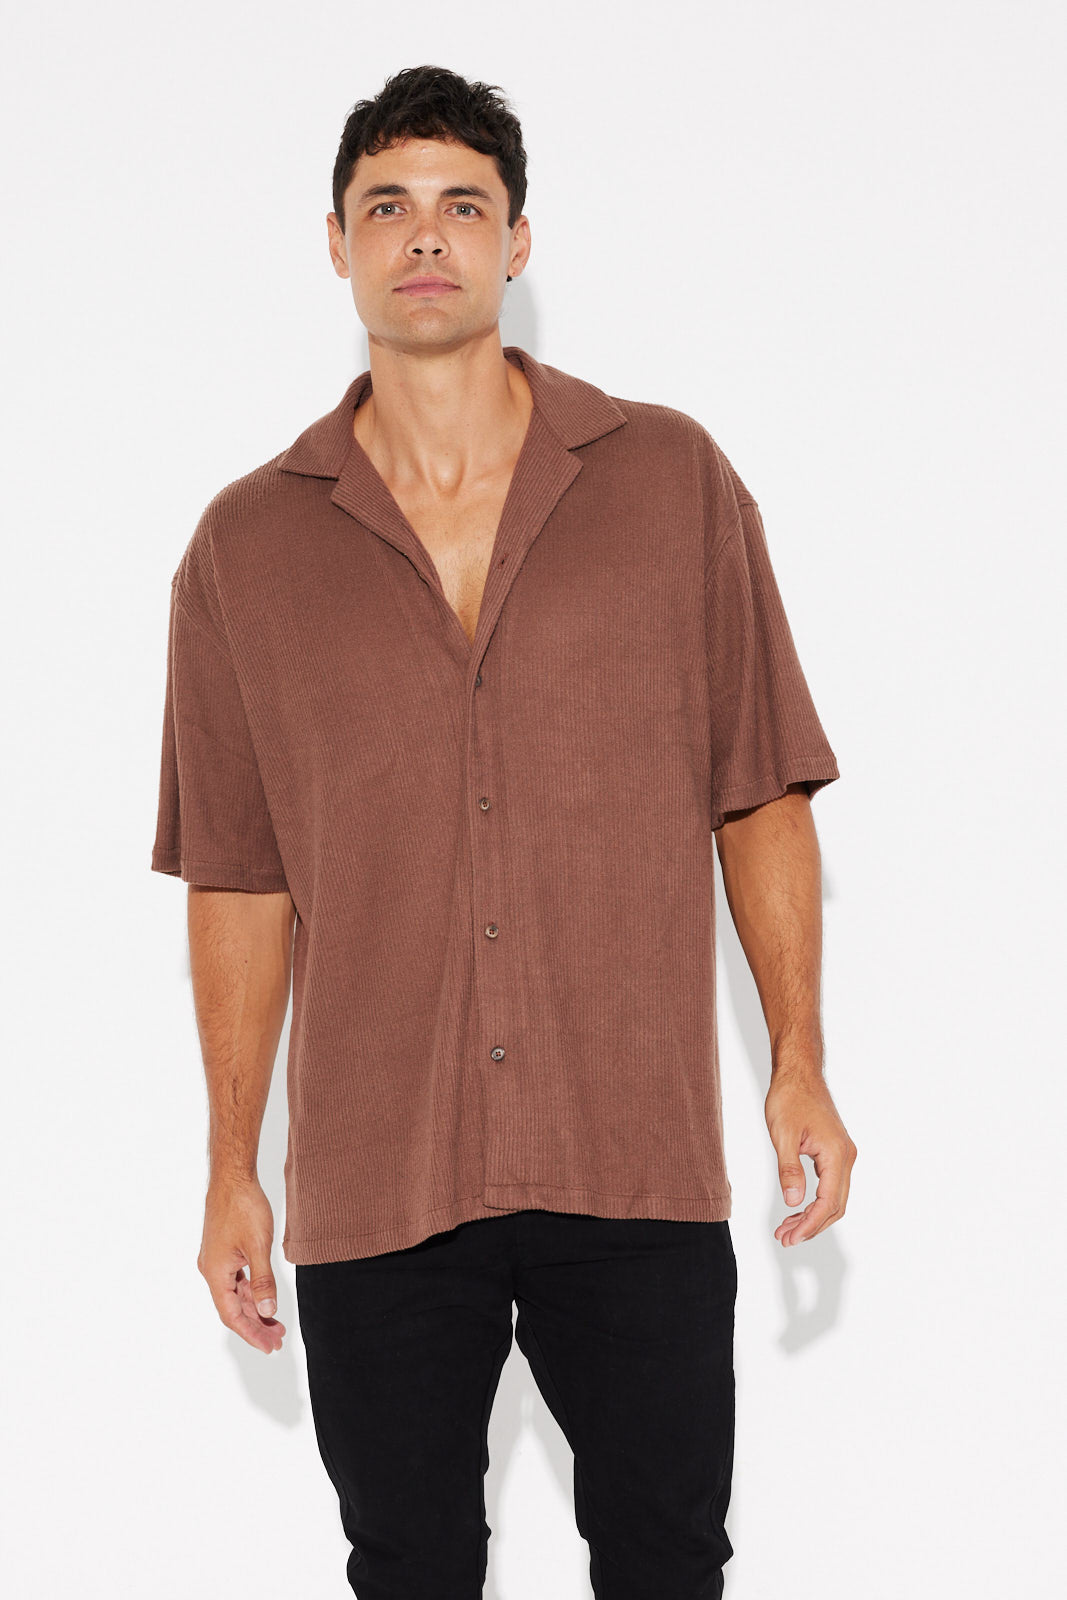 Cord Knit Short Sleeve Shirt Choc - FINAL SALE